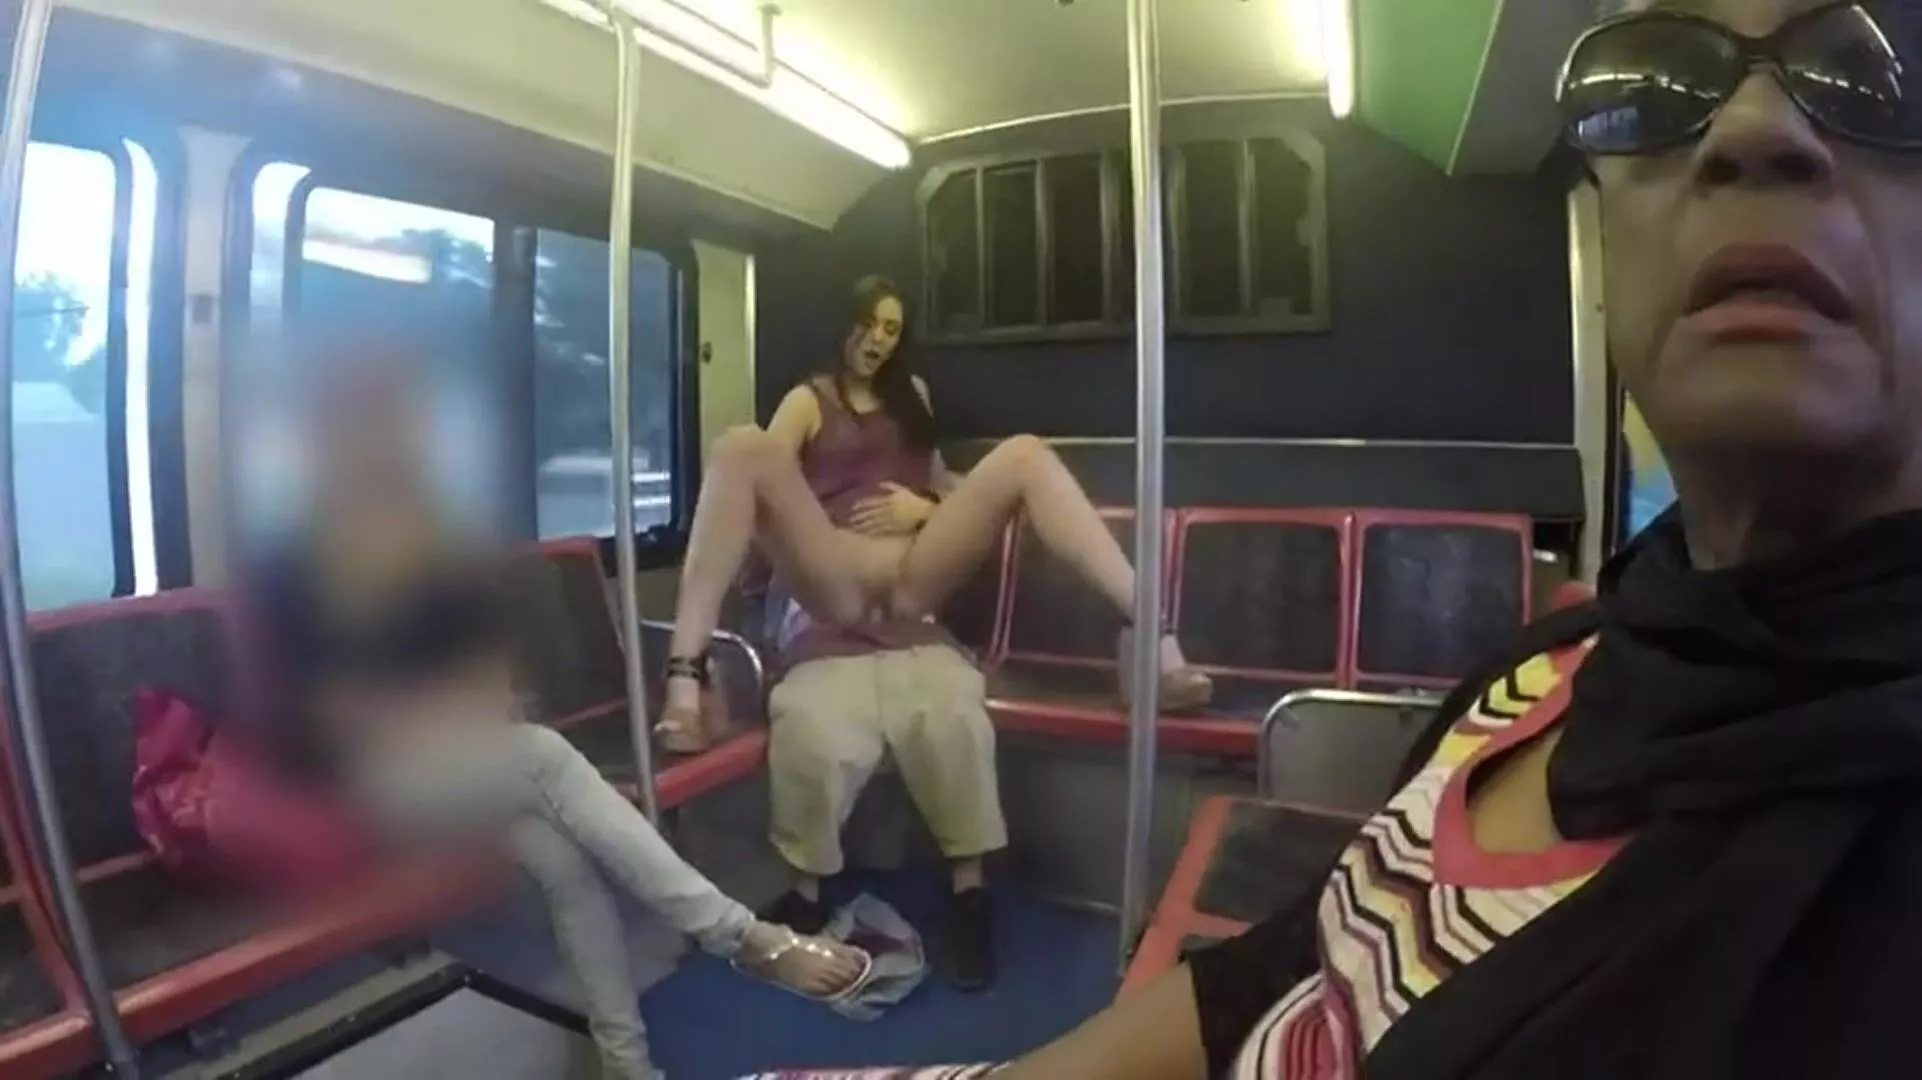 The Bus - Public: Public sex in the Bus - Porn GIF Video | netyda.com